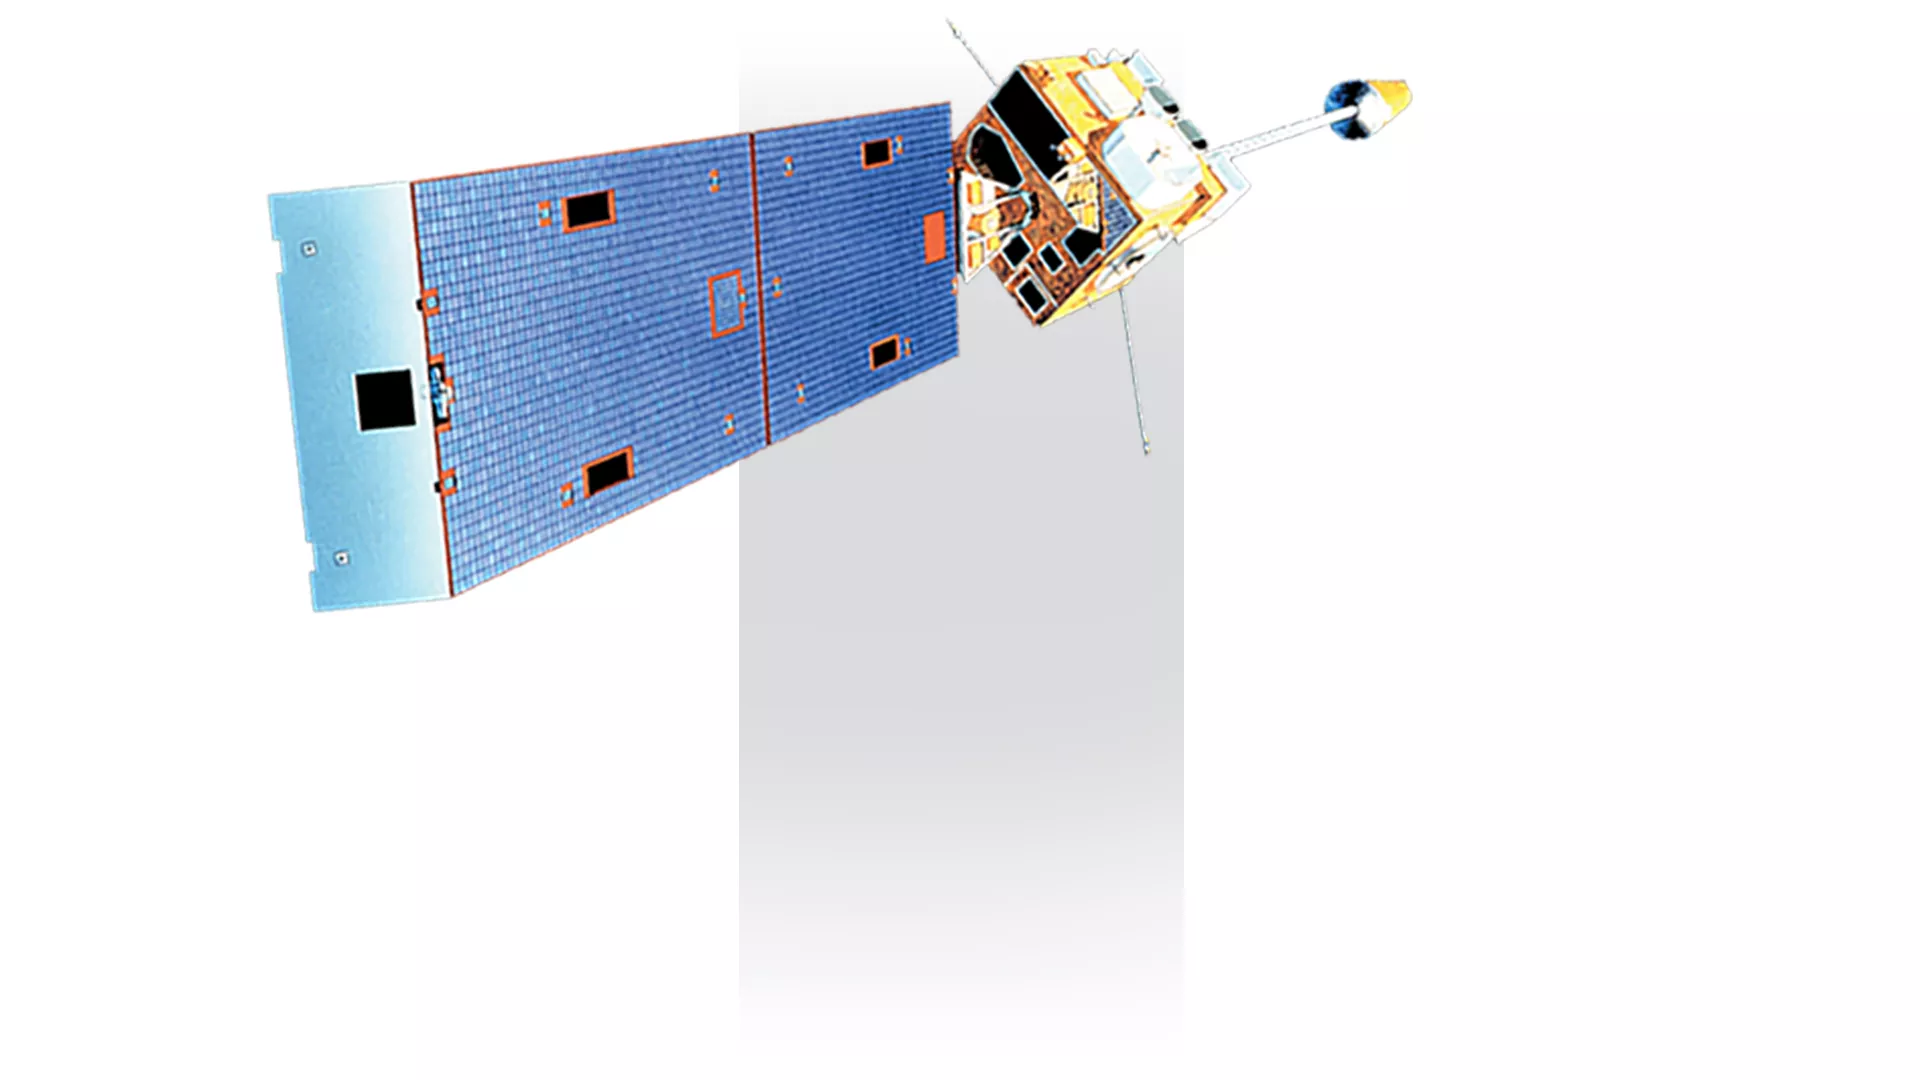 GOES-I satellite